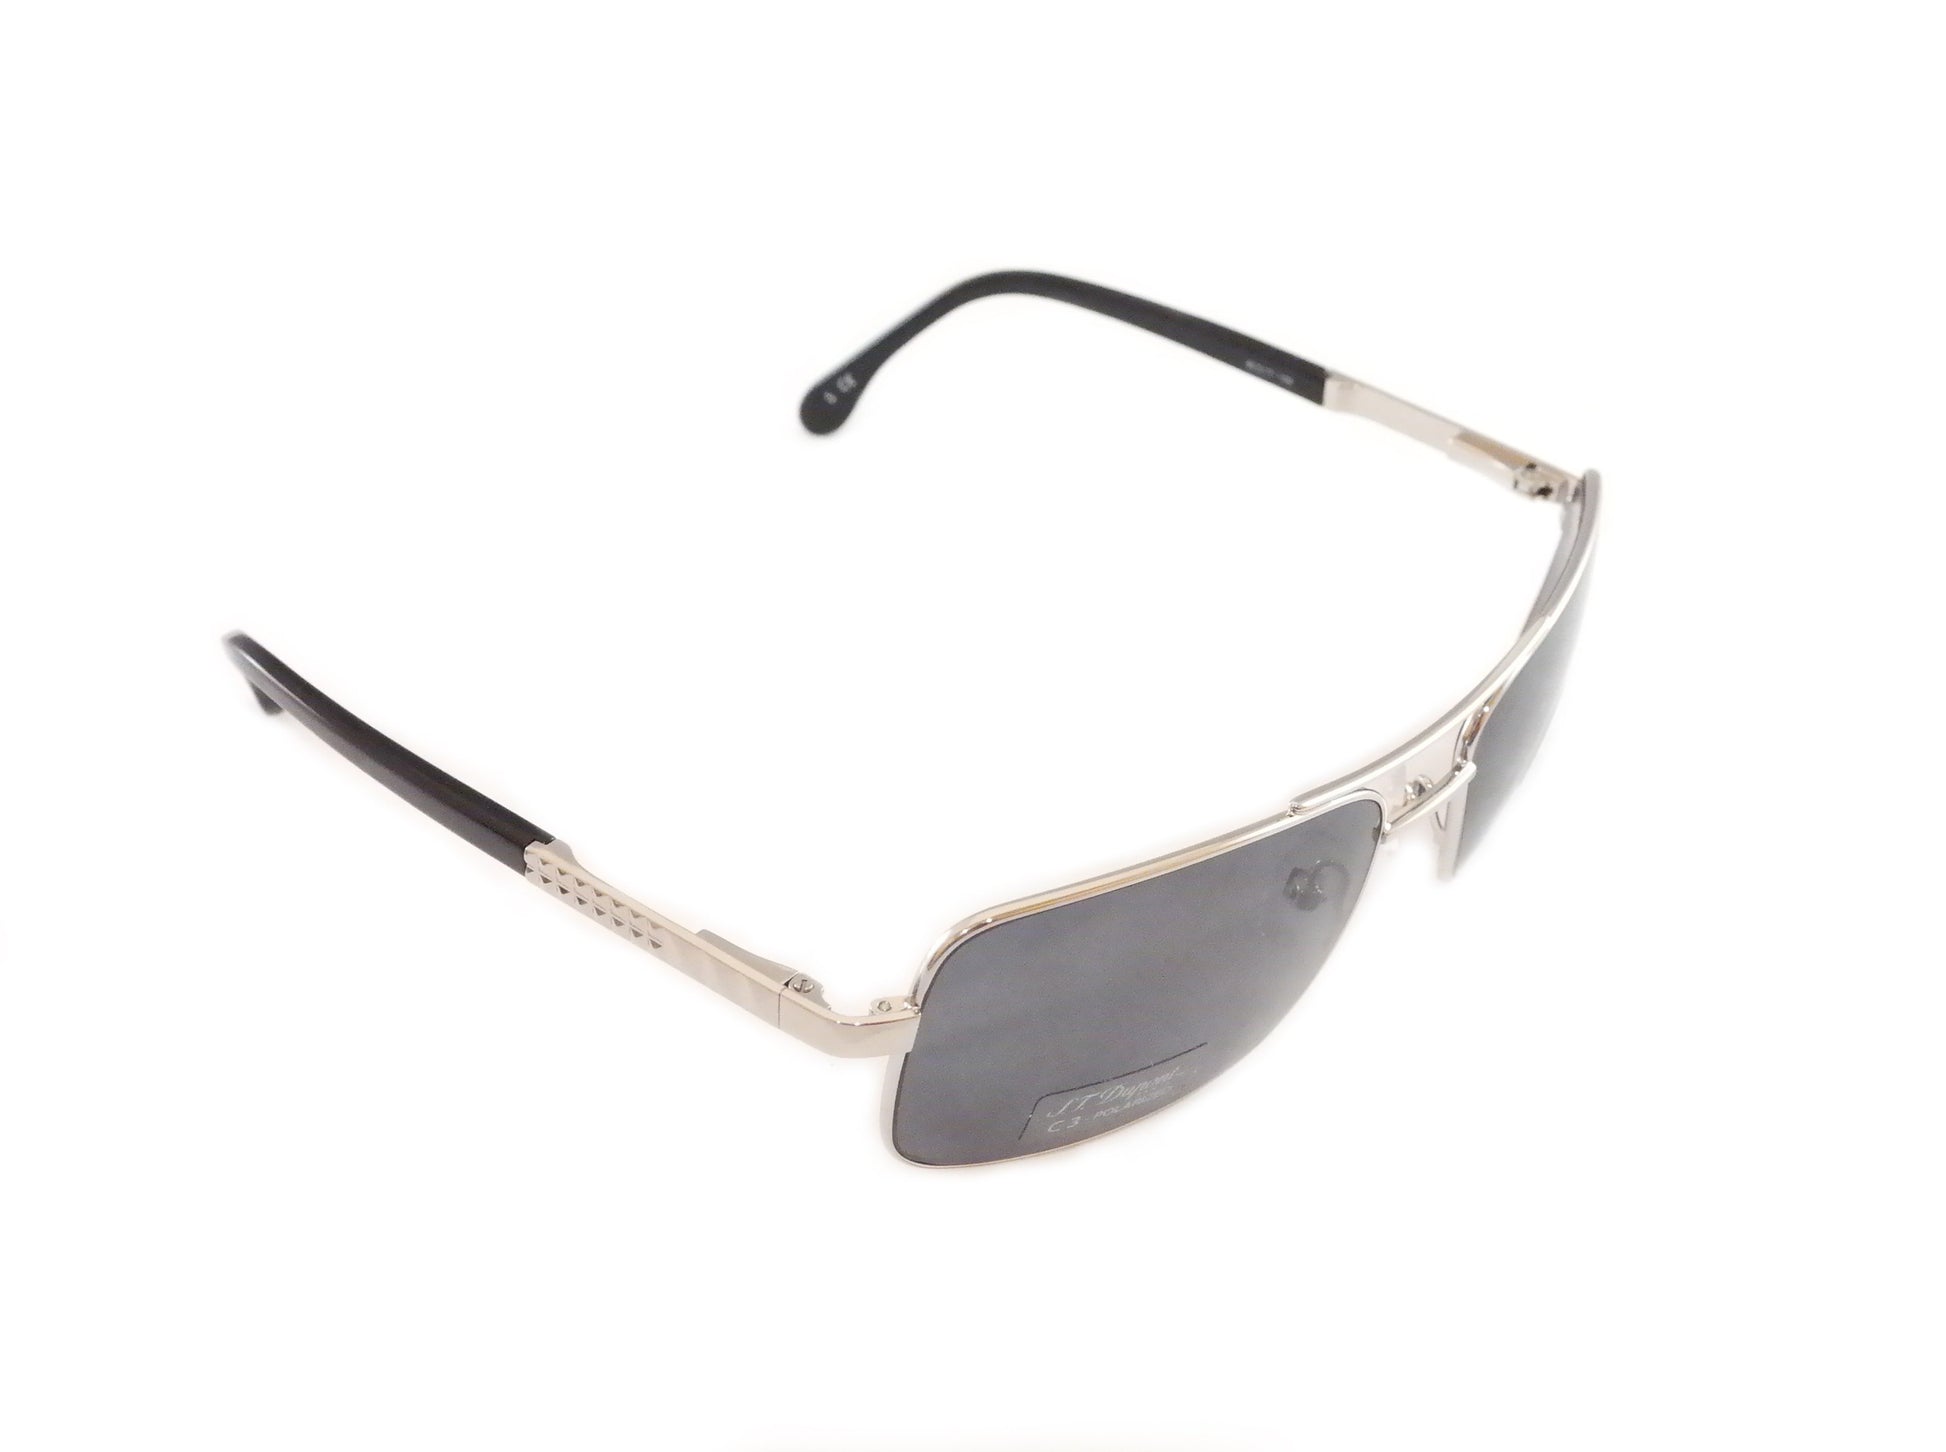 S. T. Dupont Sunglasses DP7003 Polarized Lenses Metal Japan 100% UV Category 3 - Frame Bay